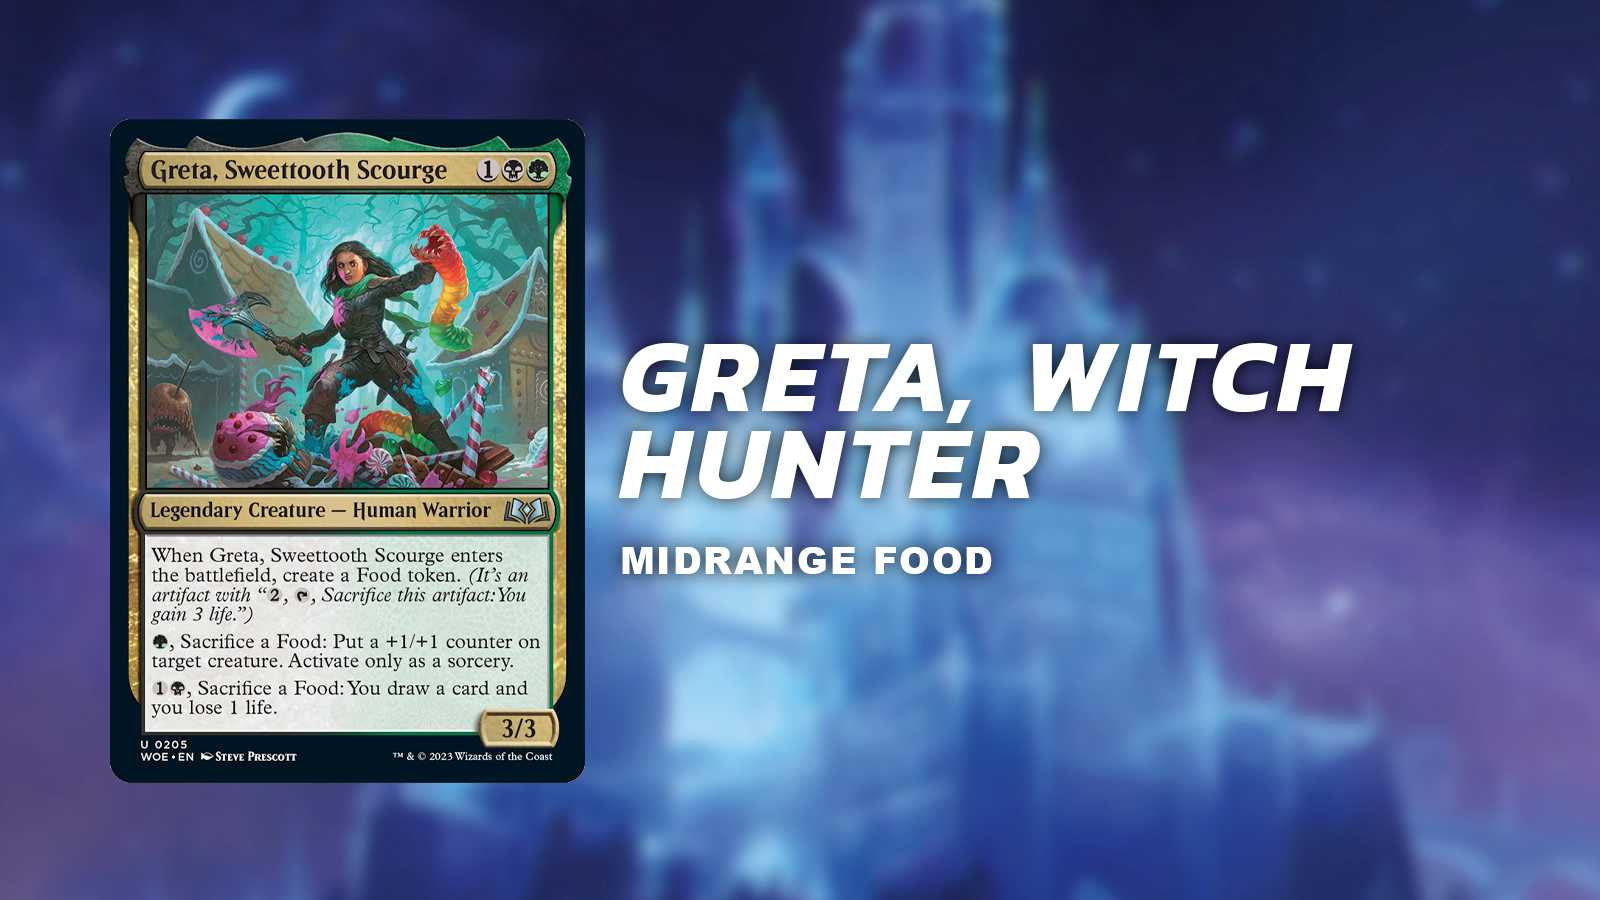 Greta, Witch Hunter (Midrange Food)